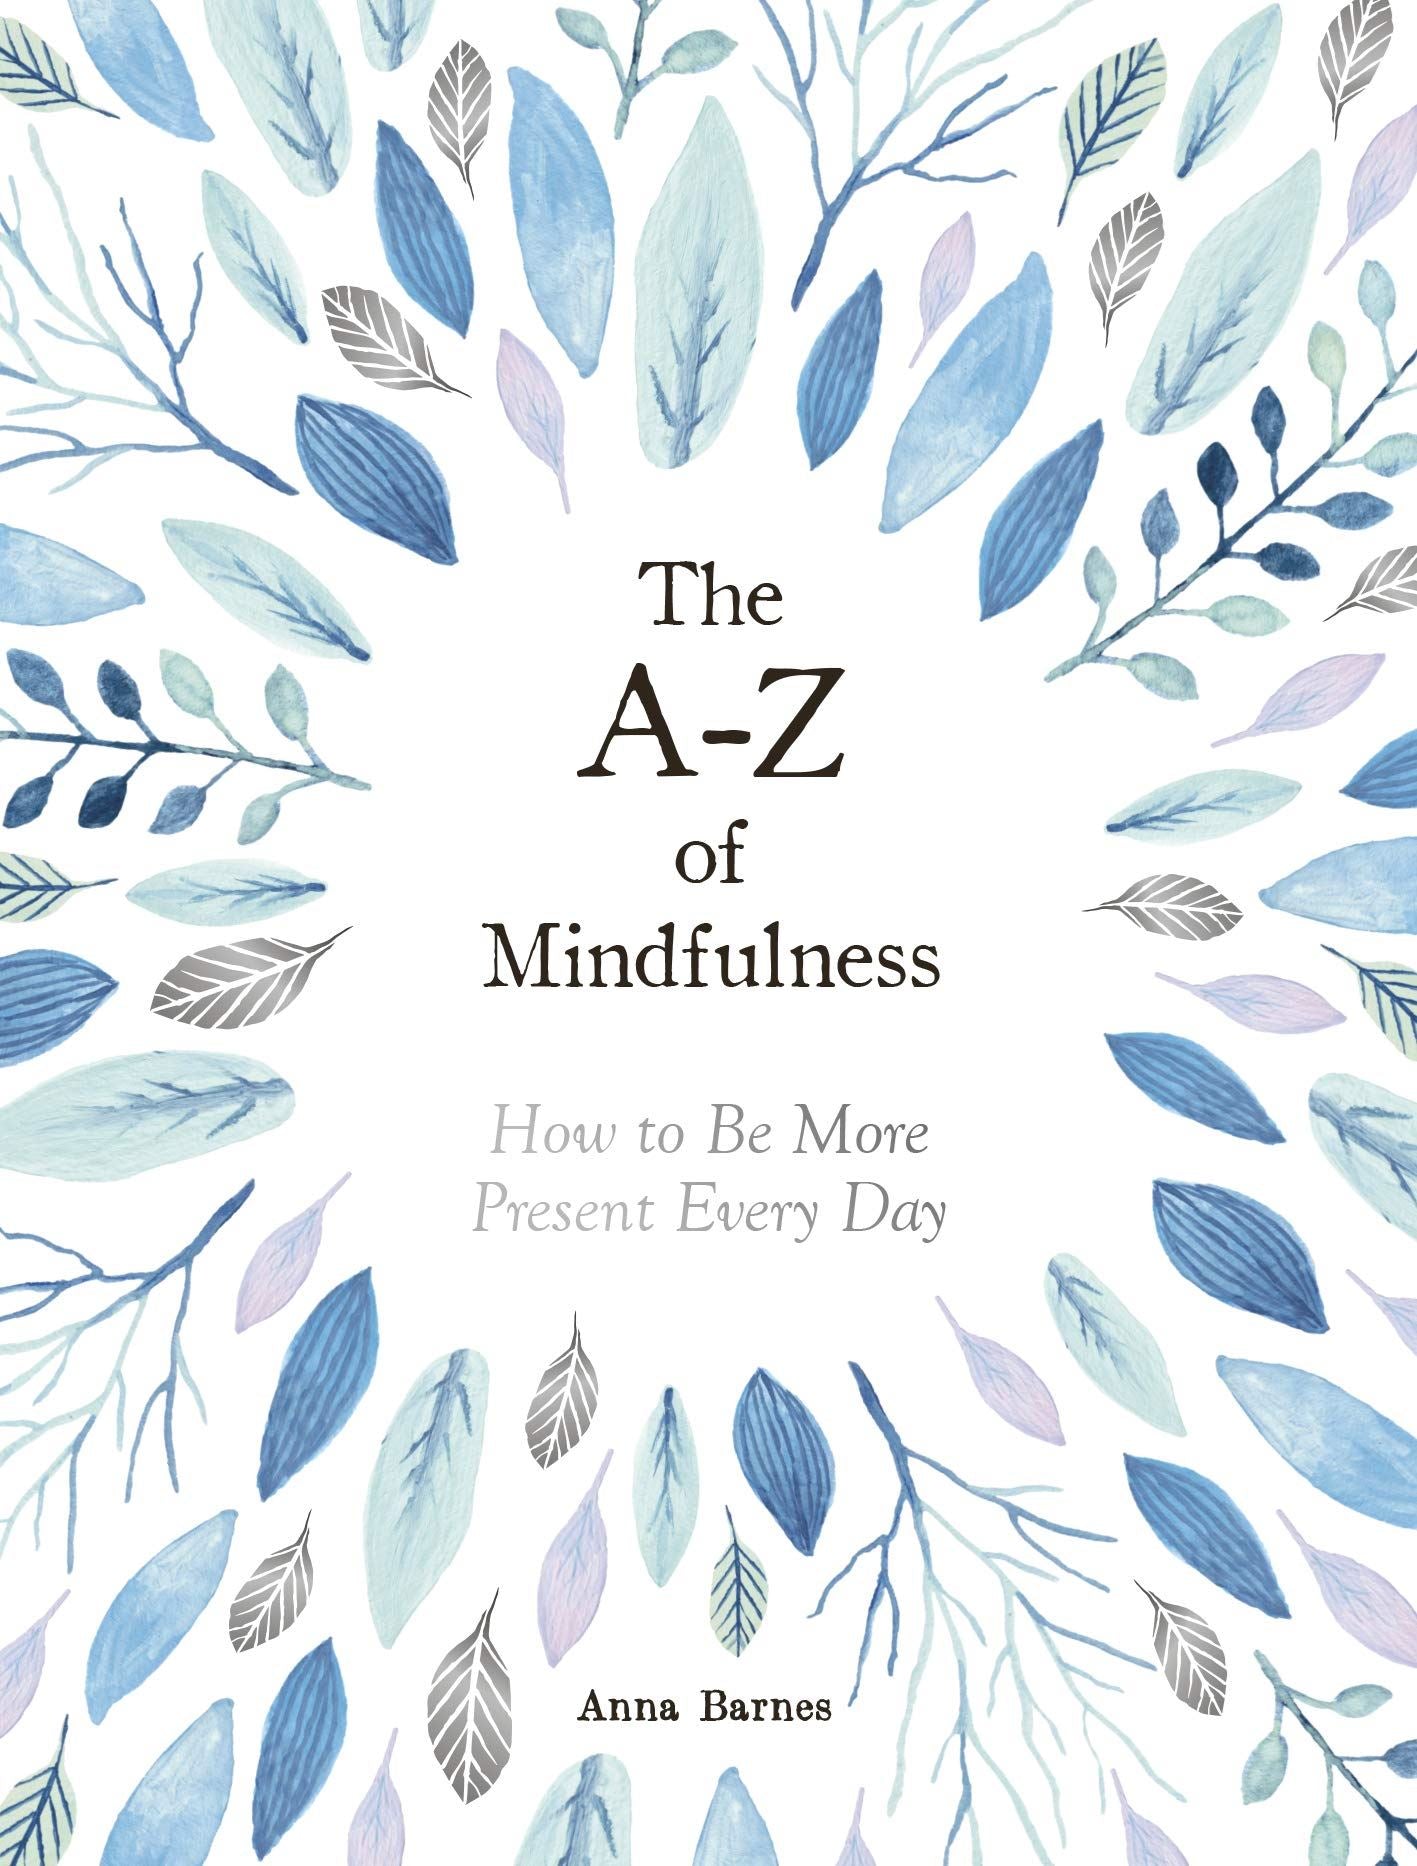 A to Z of Mindfulness